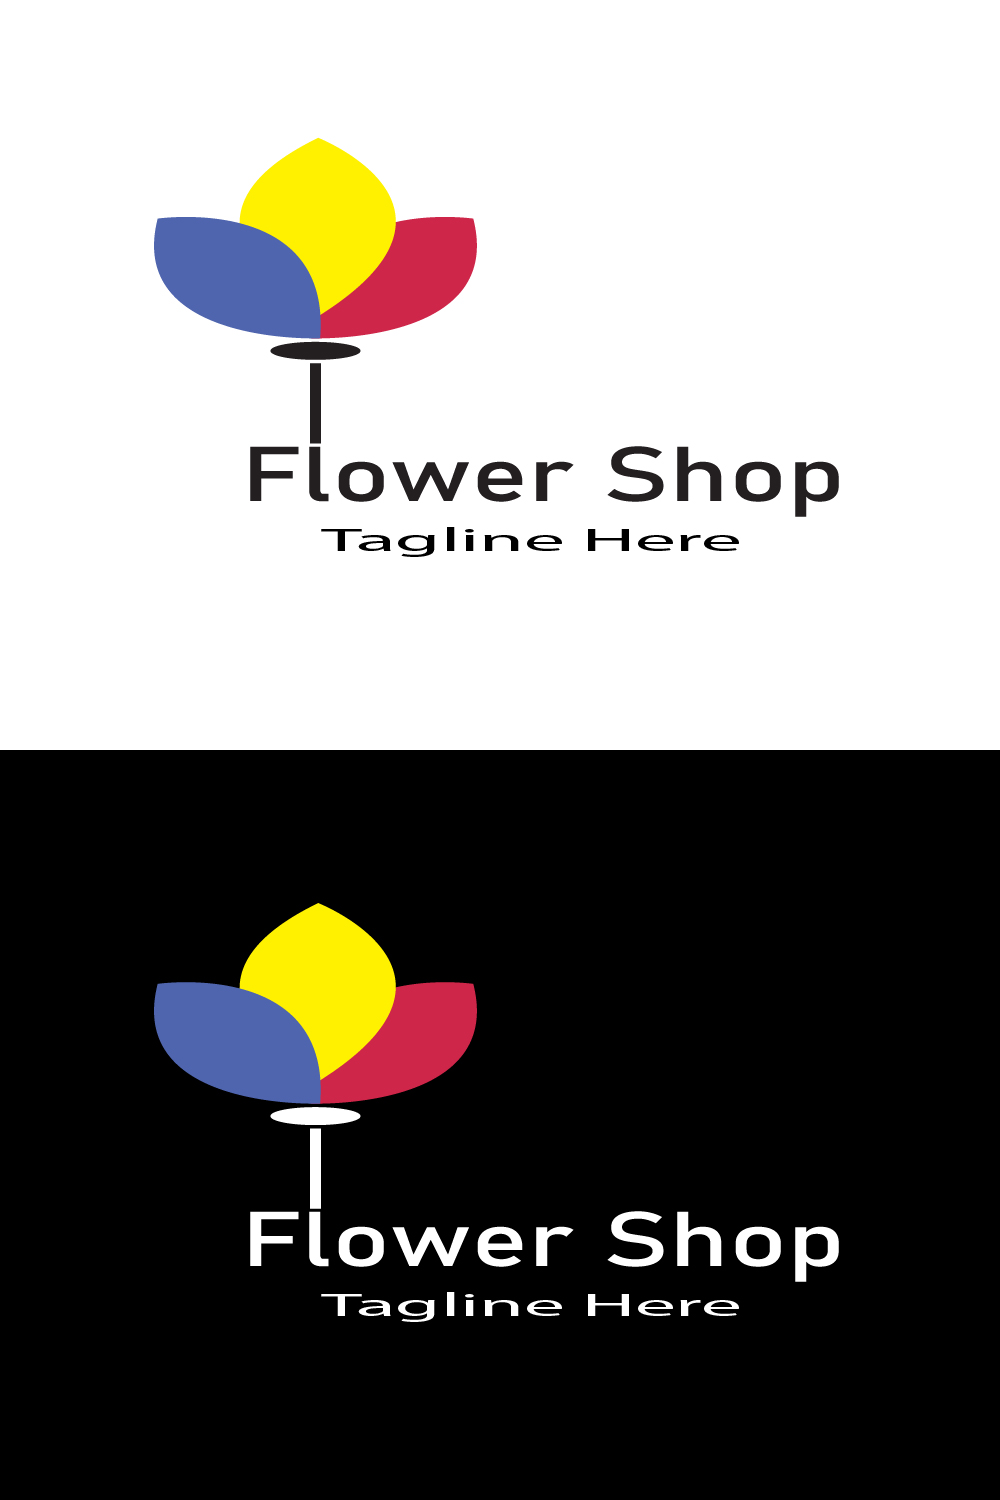 Flower Shop Logo Pinterest collage image.